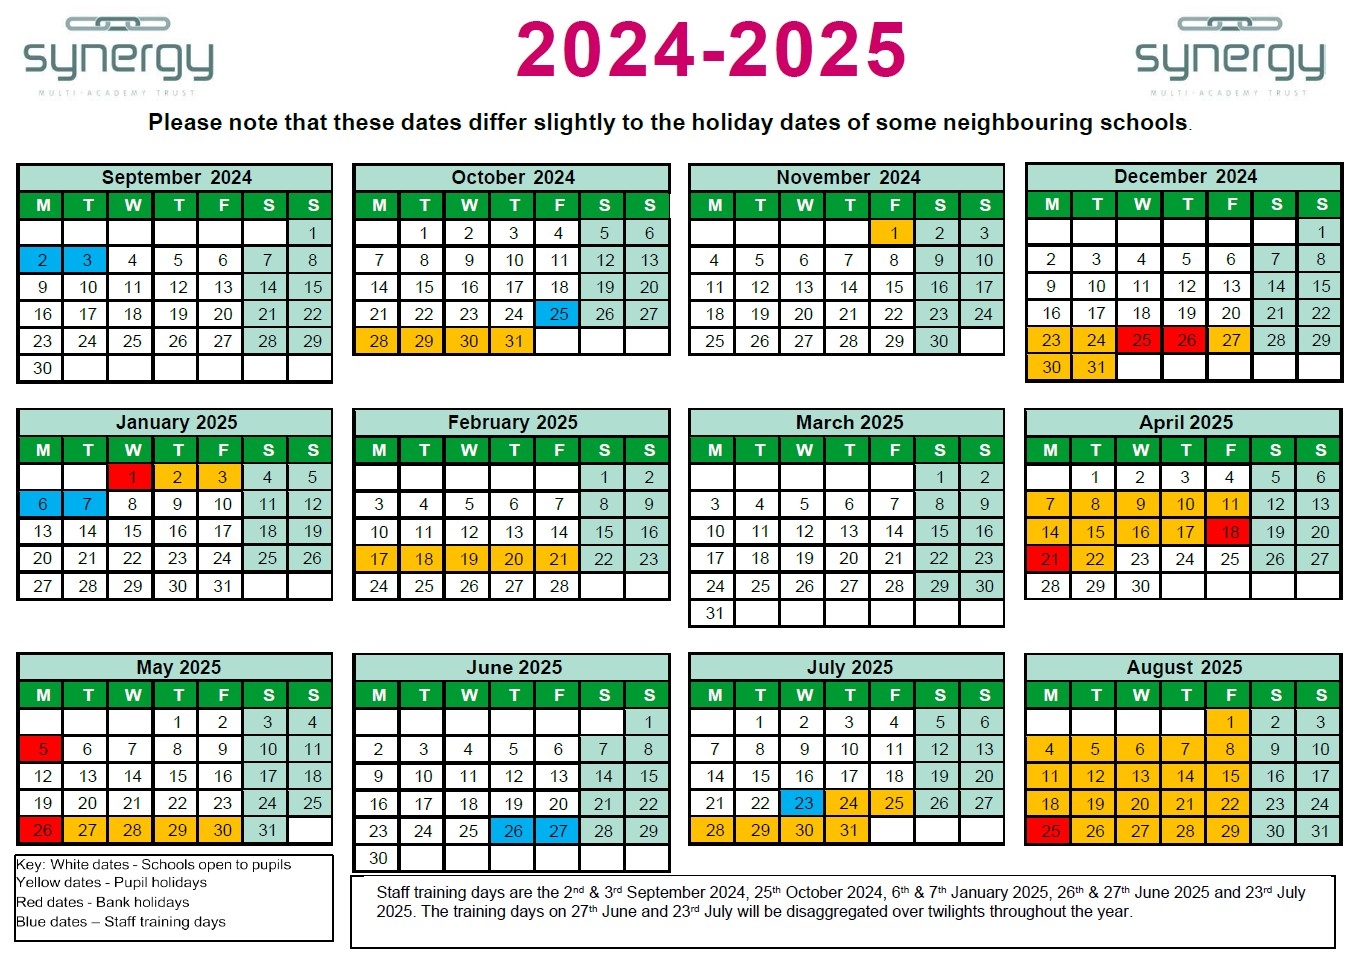 cobb-county-school-calendar-2024-2025-marietta